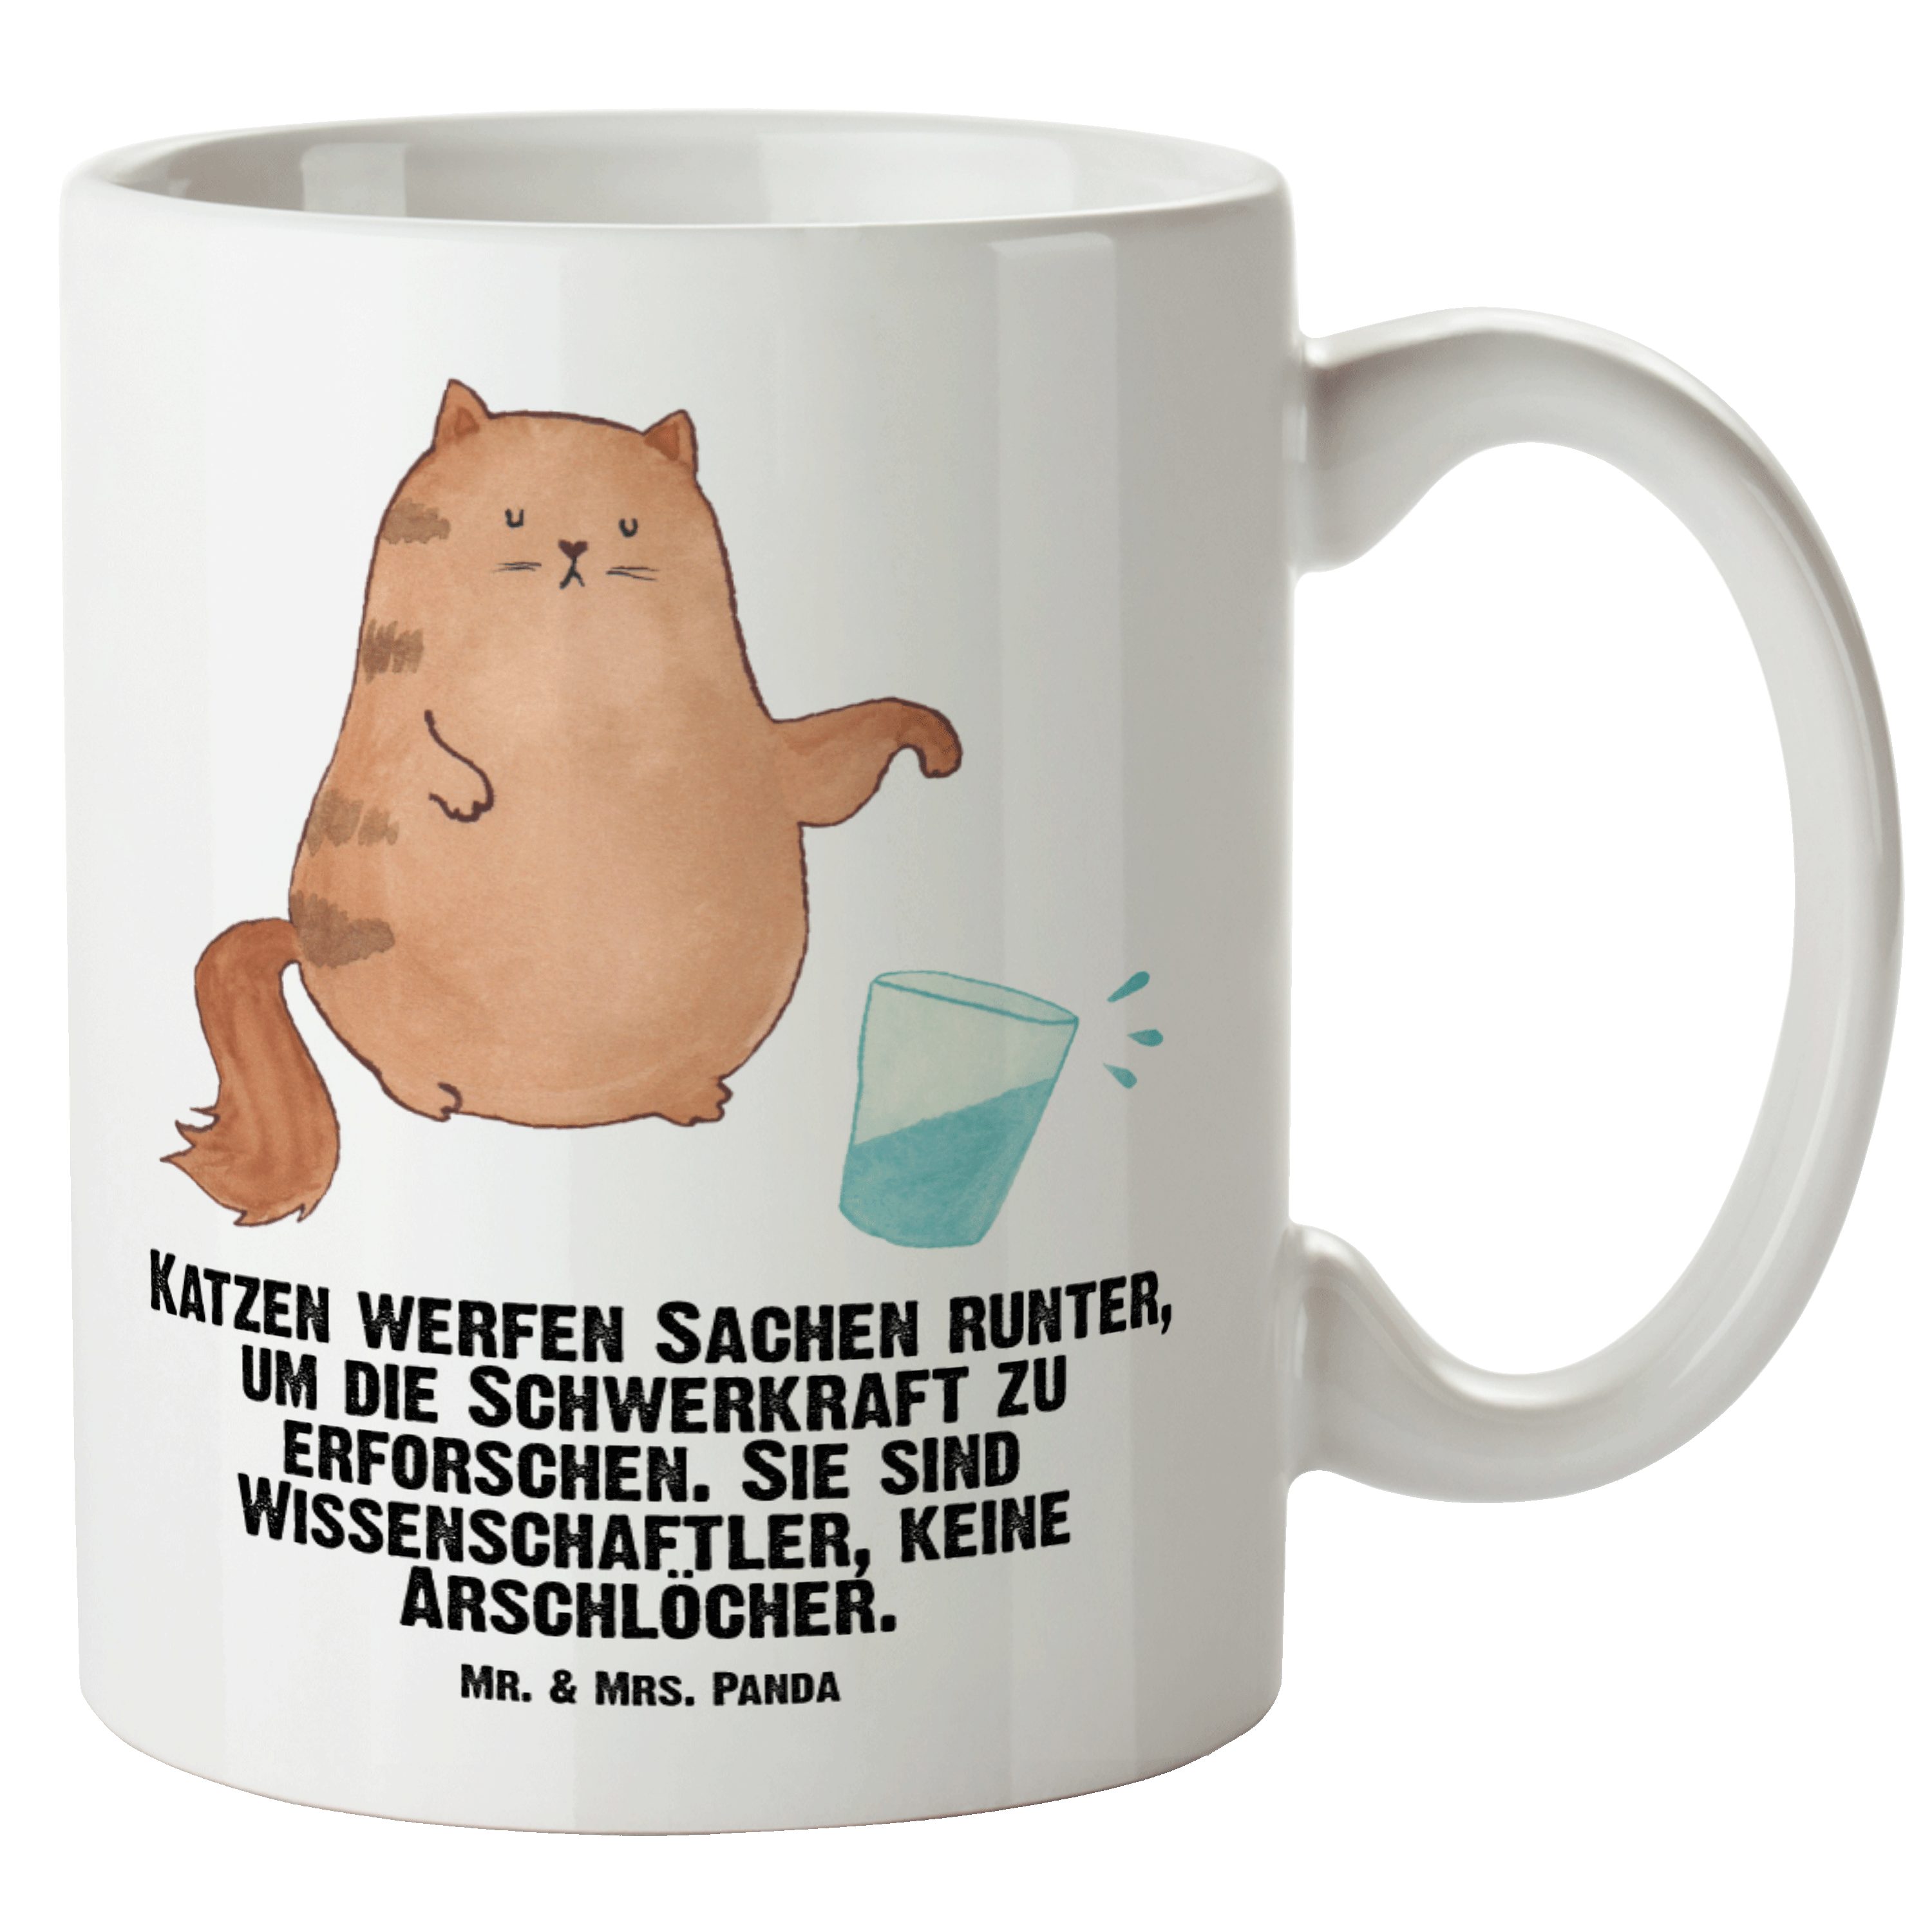 Mr. & Mrs. Panda Tasse XL Grosse - Wasserglas Tasse Katze Katzendeko, Weiß Keramik - Geschenk, Kaffeetasse